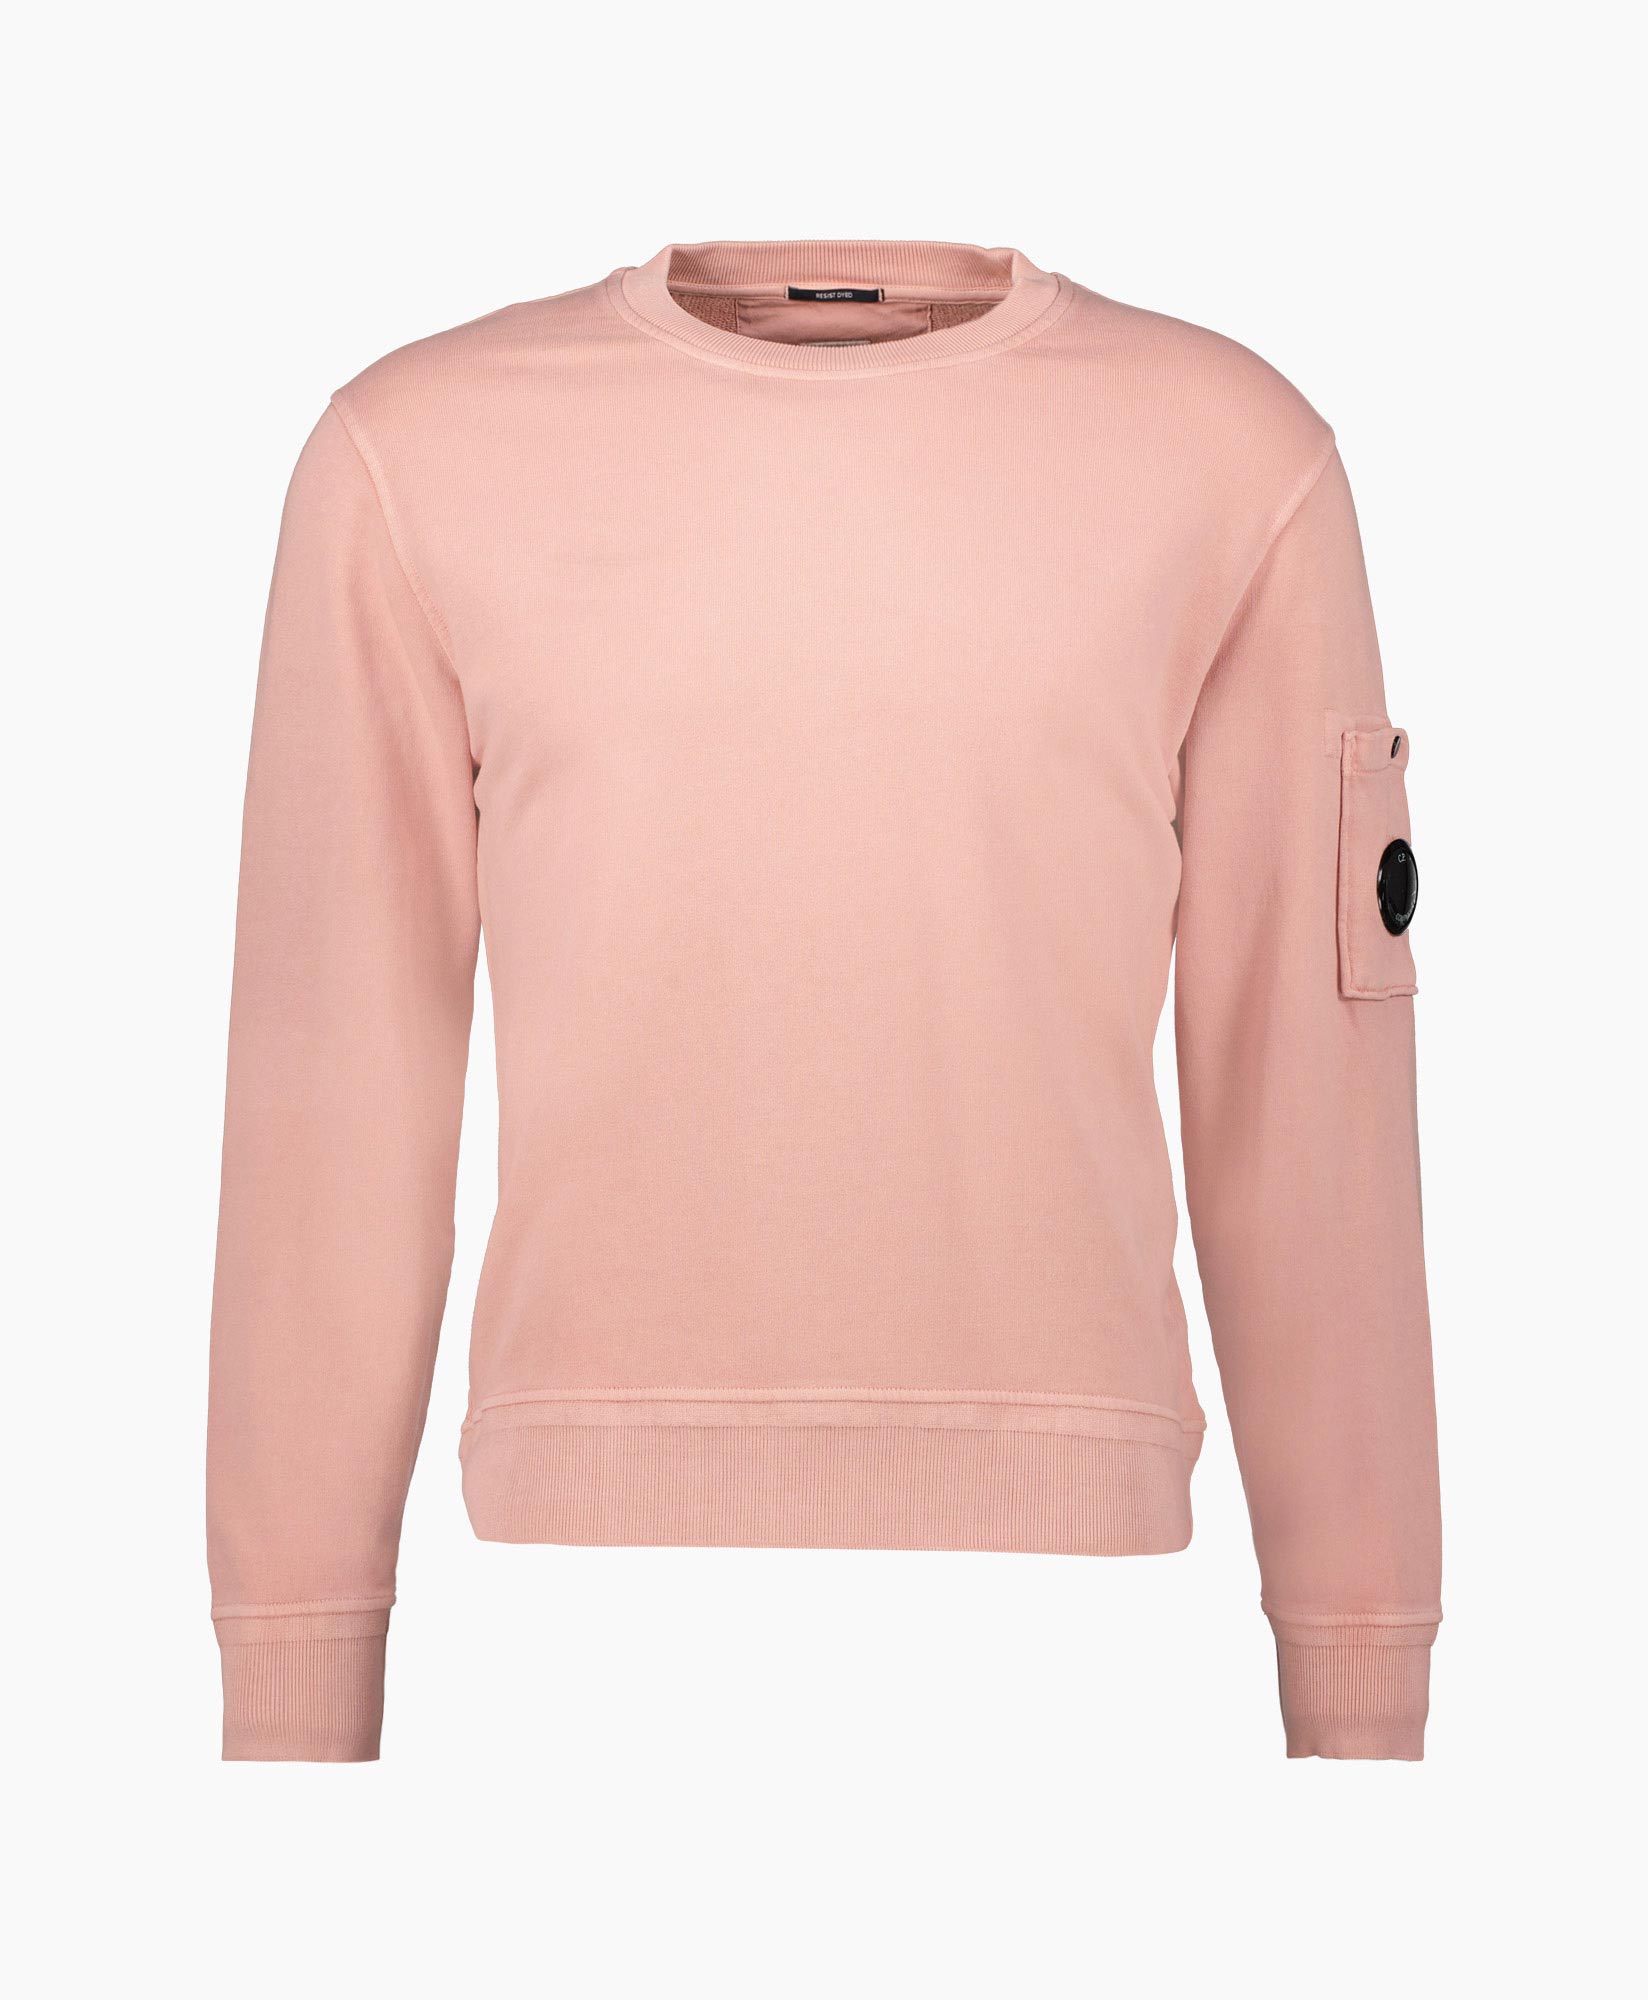 Cp Company Sweater S136a-005398r Rose